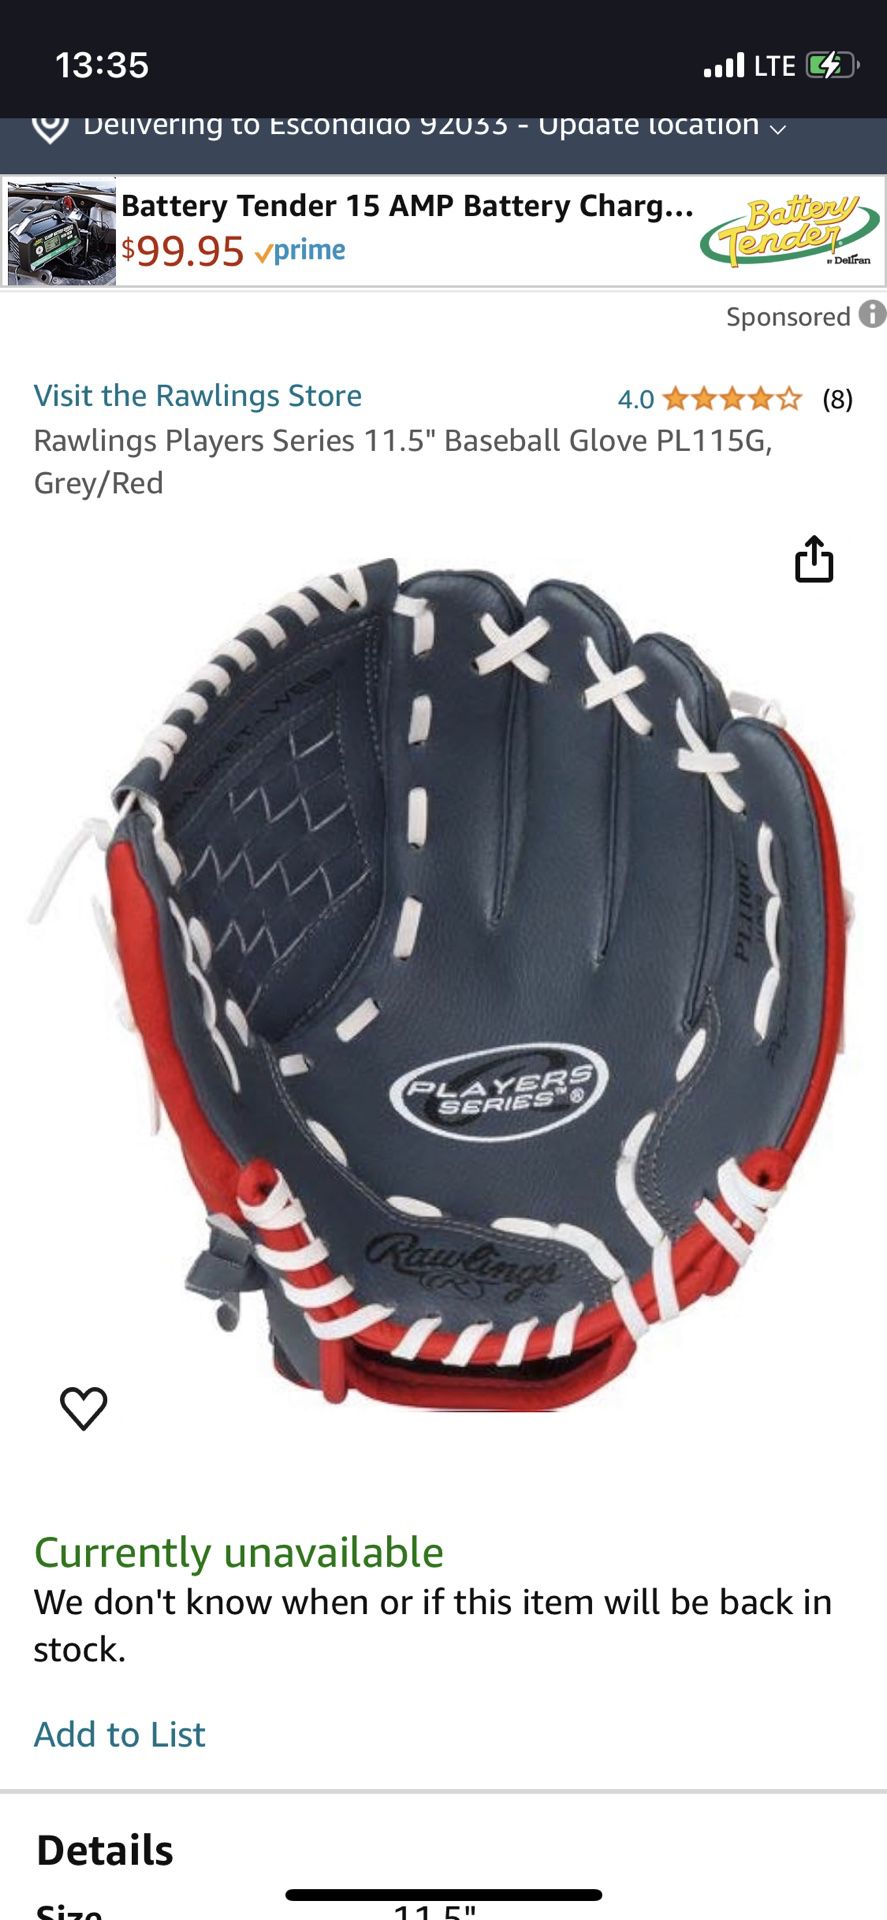 Rawlings Players Series 11.5" Baseball Glove PL115G, Grey/Red